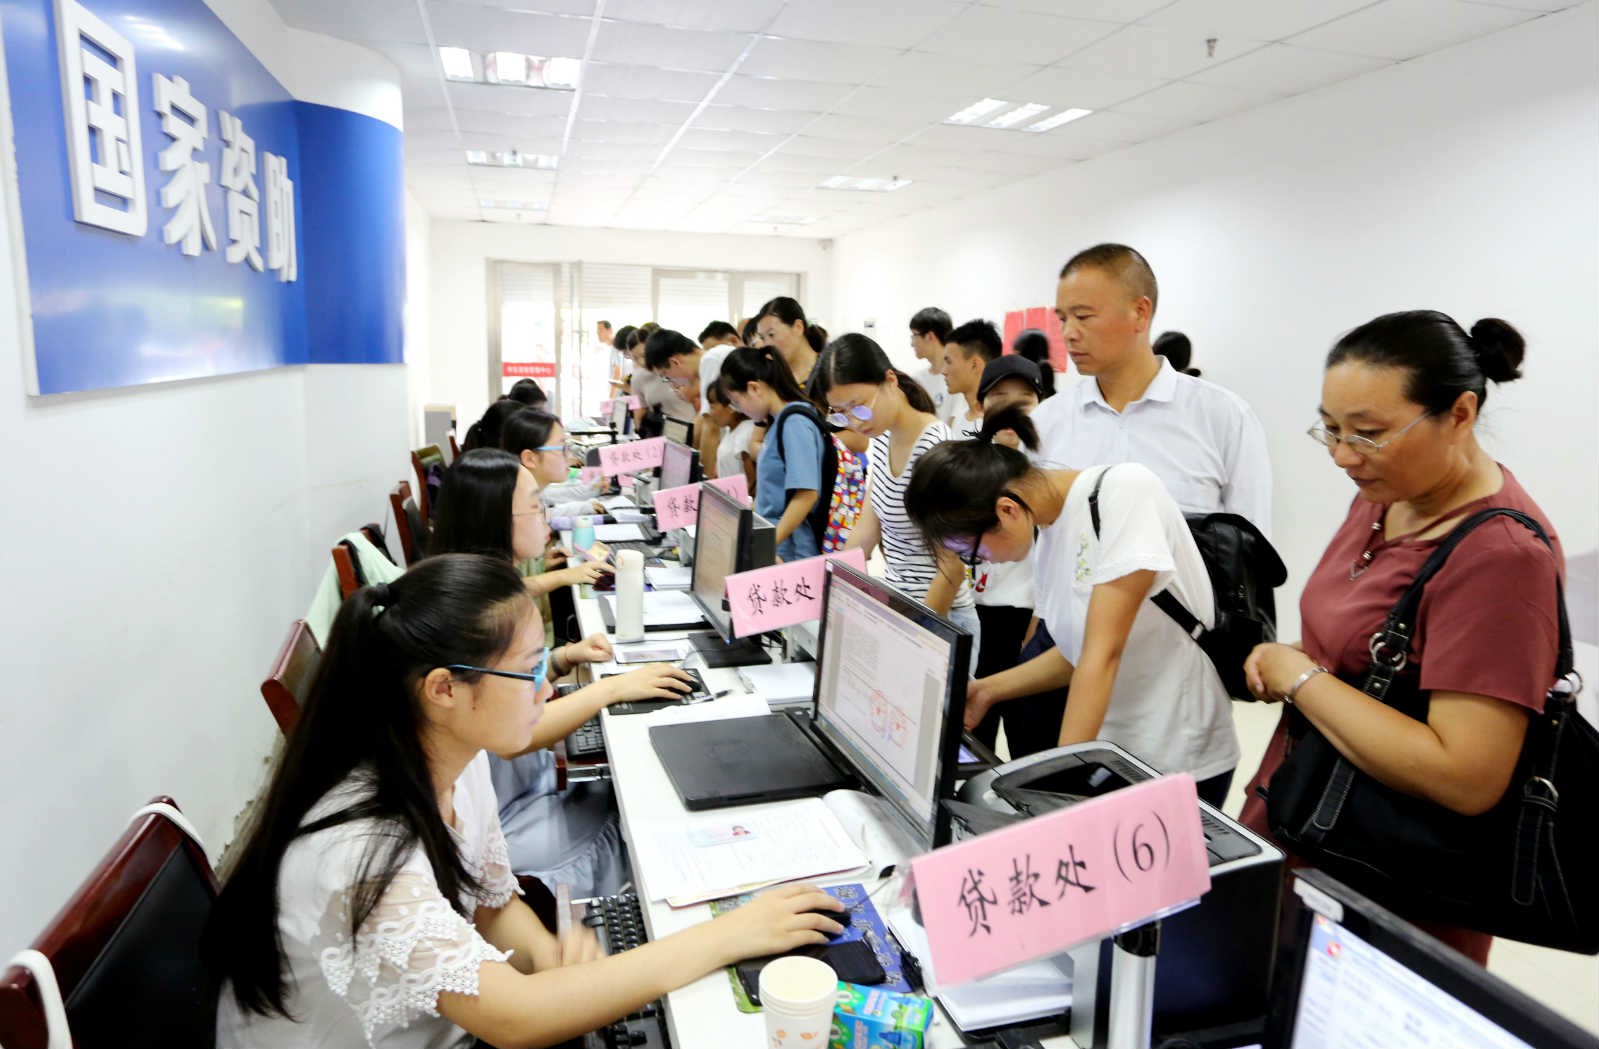 China enhances efforts to build fairer education environment